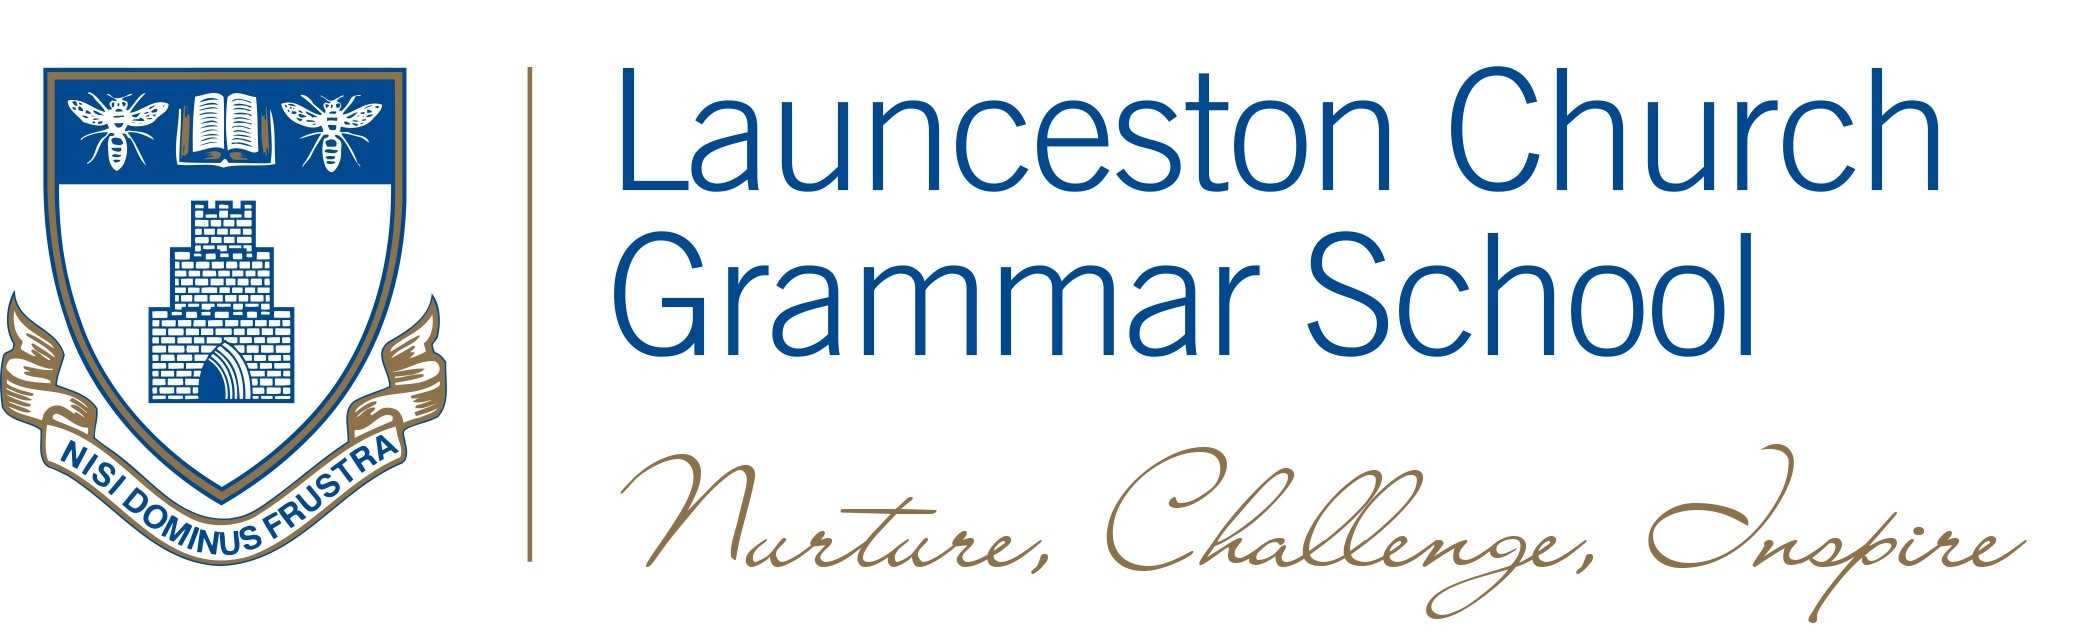 Self Photos / Files - Launceston Church Grammar School_Logo